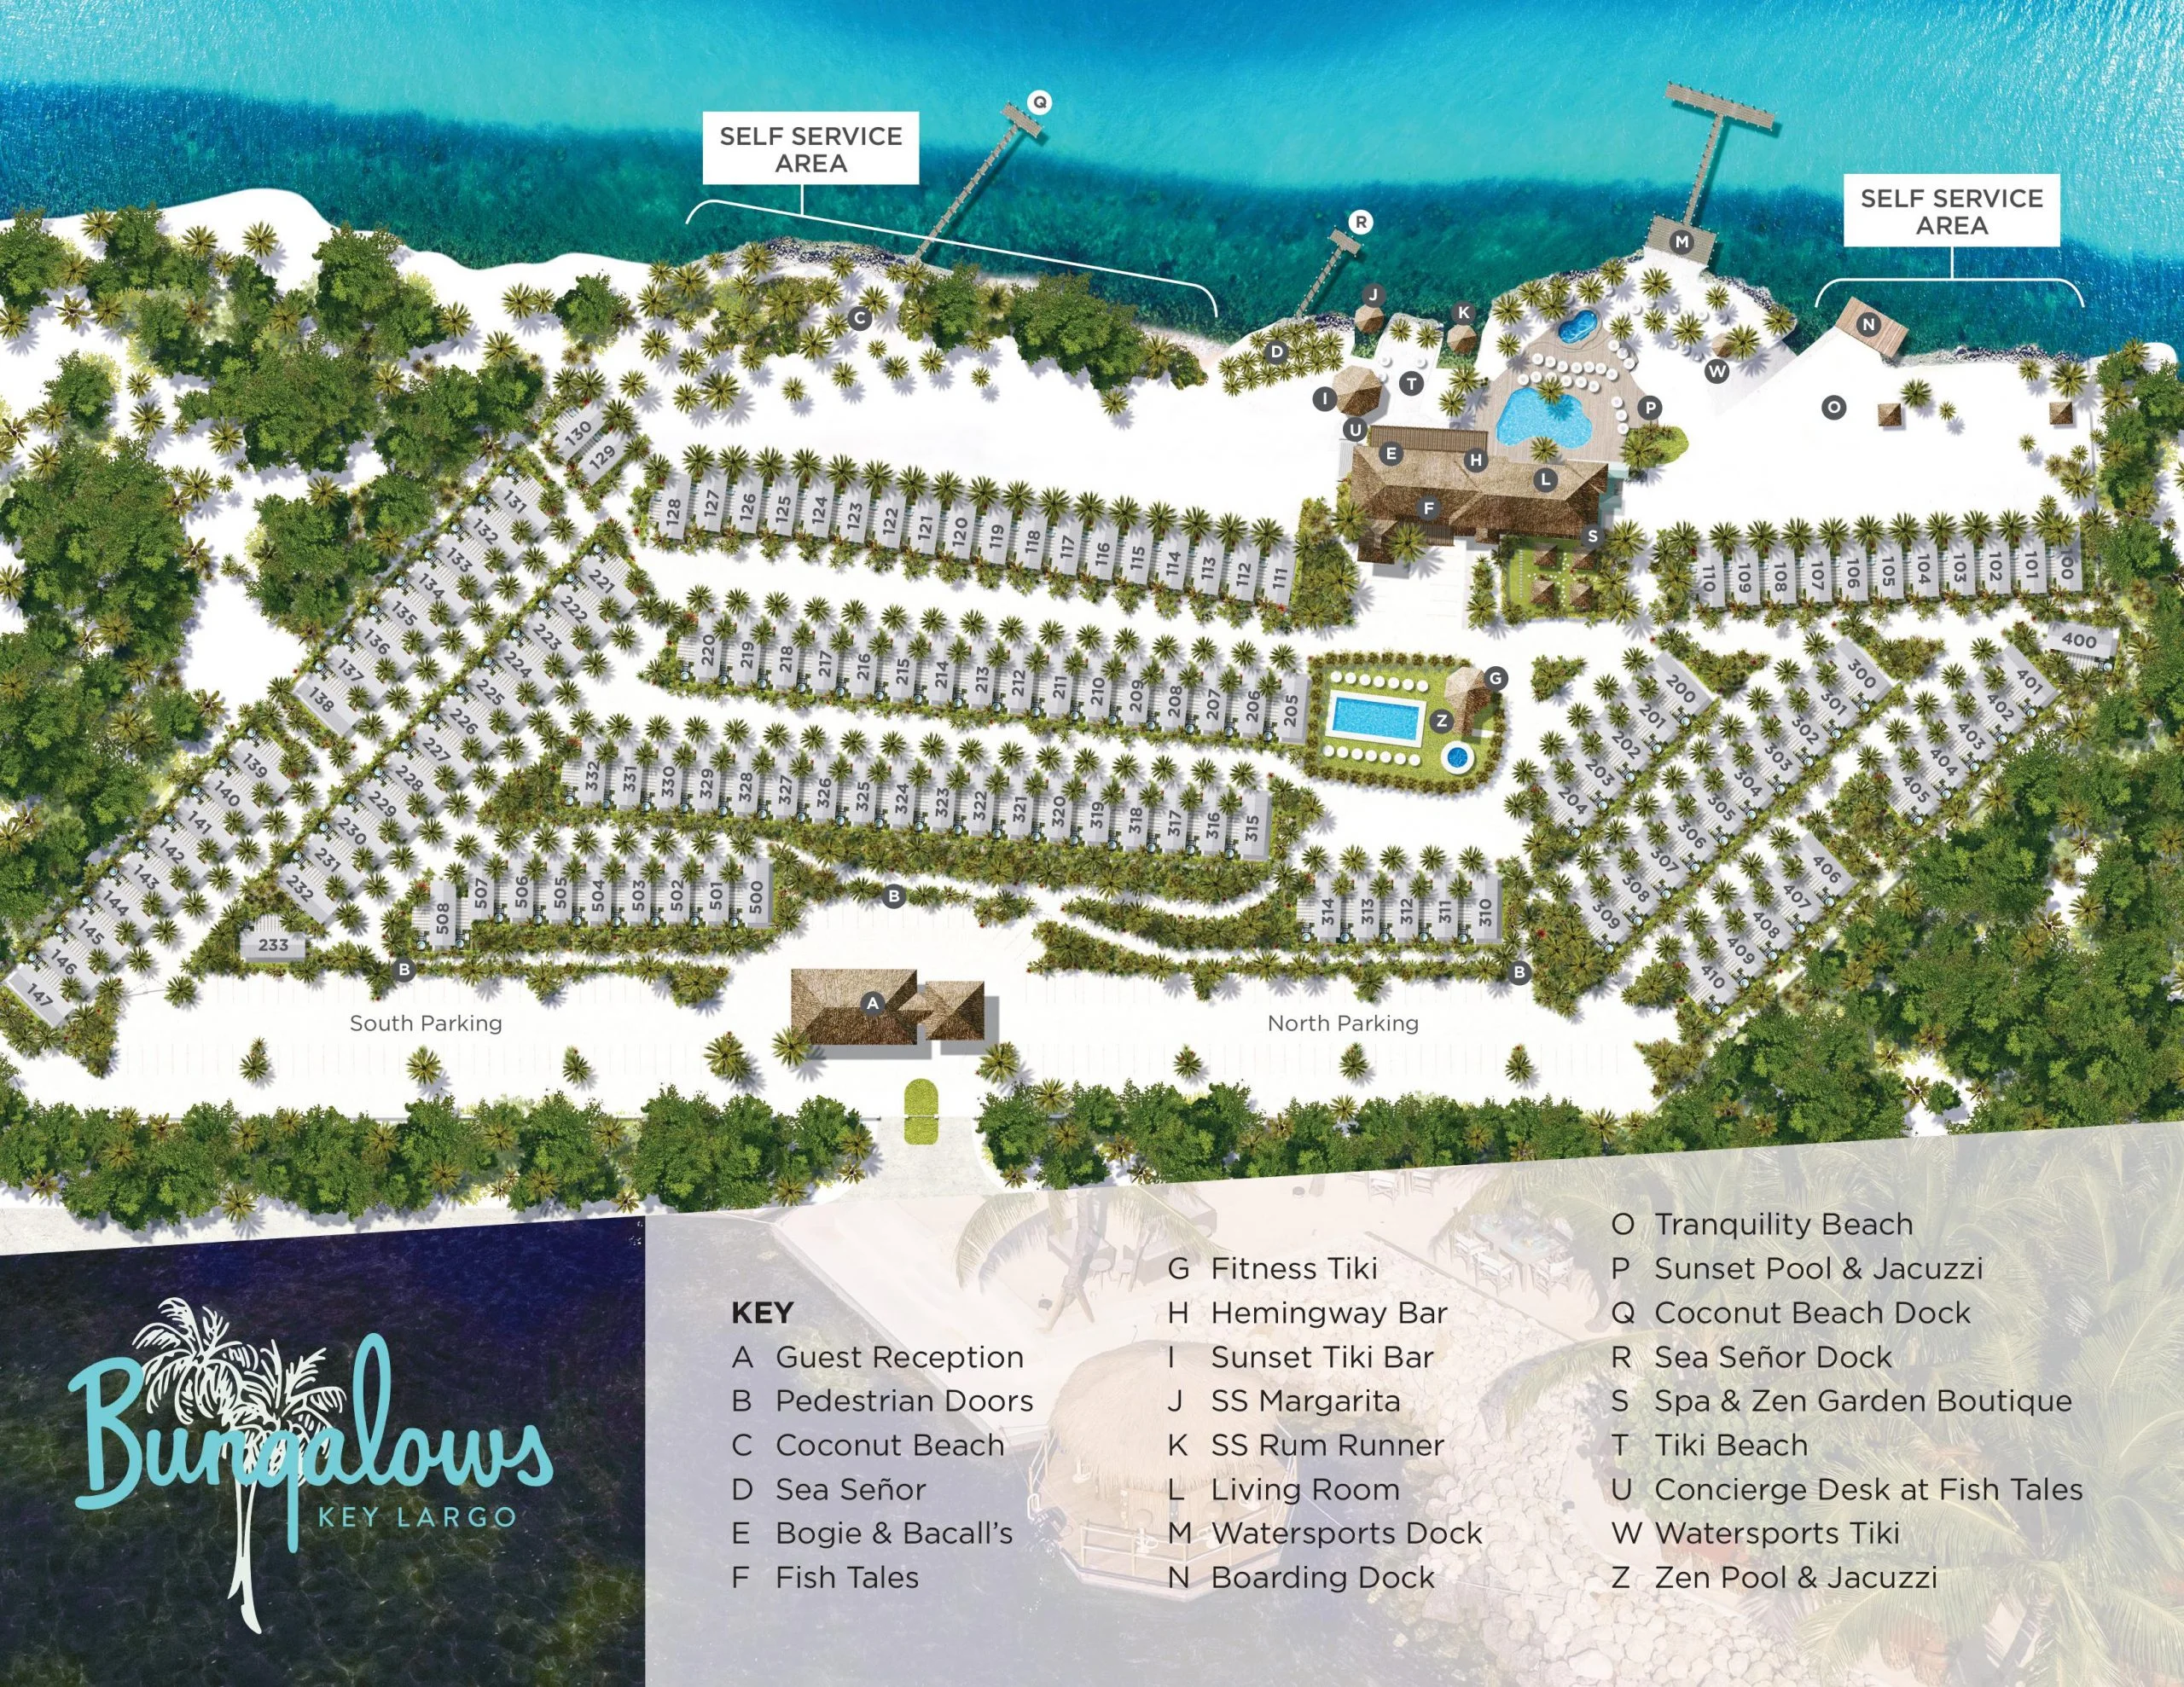 Bungalows Key Largo property map graphic